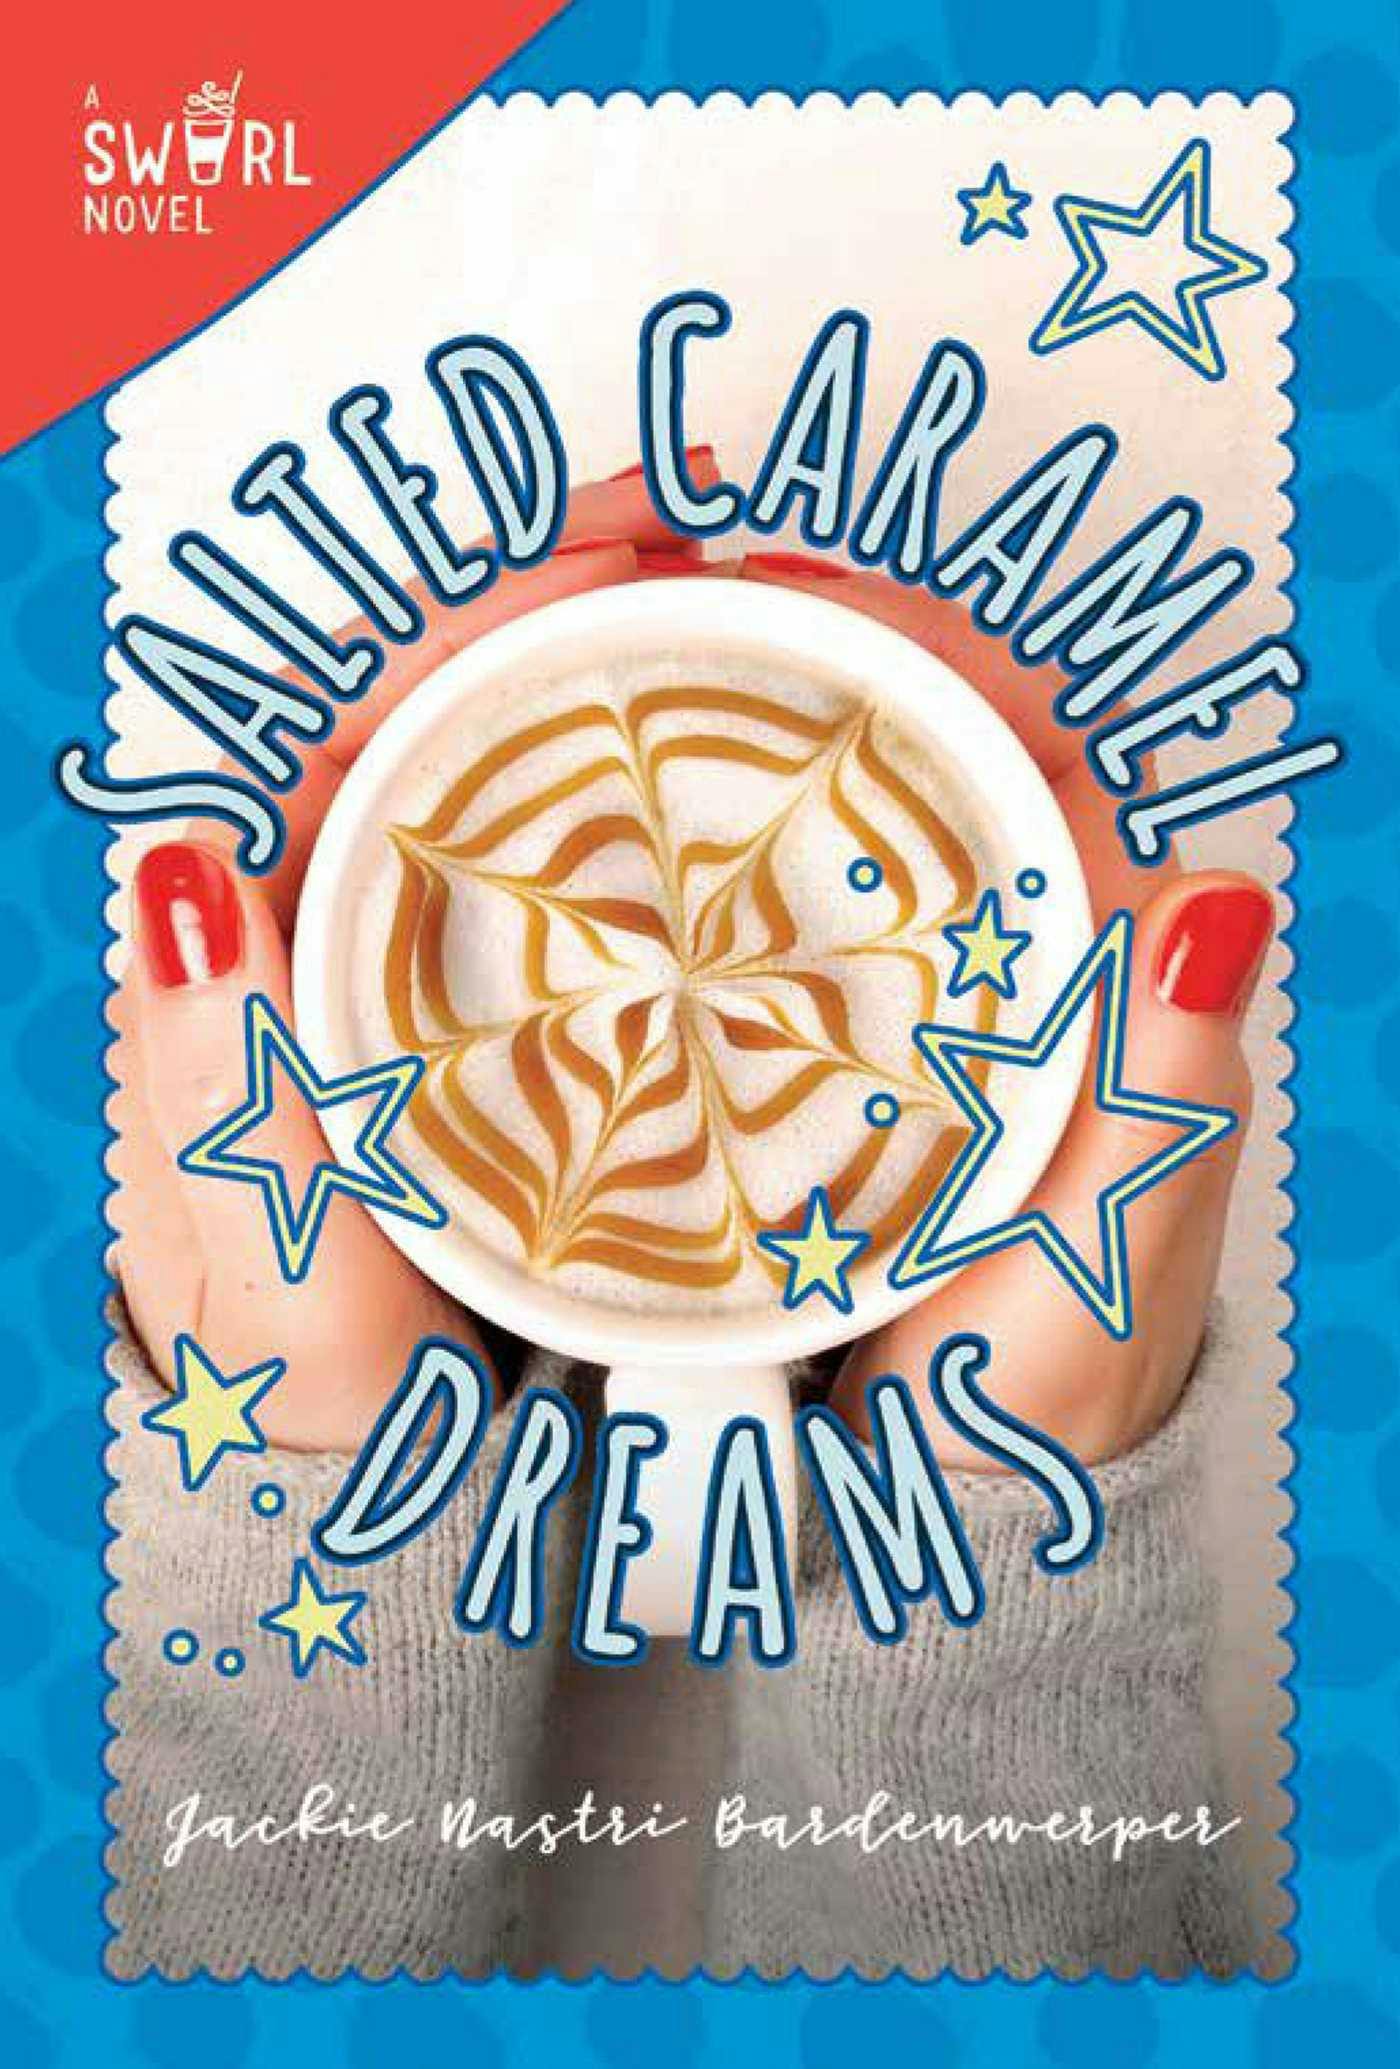 Salted Caramel Dreams: A Swirl Novel - Jackie Nastri Bardenwerper